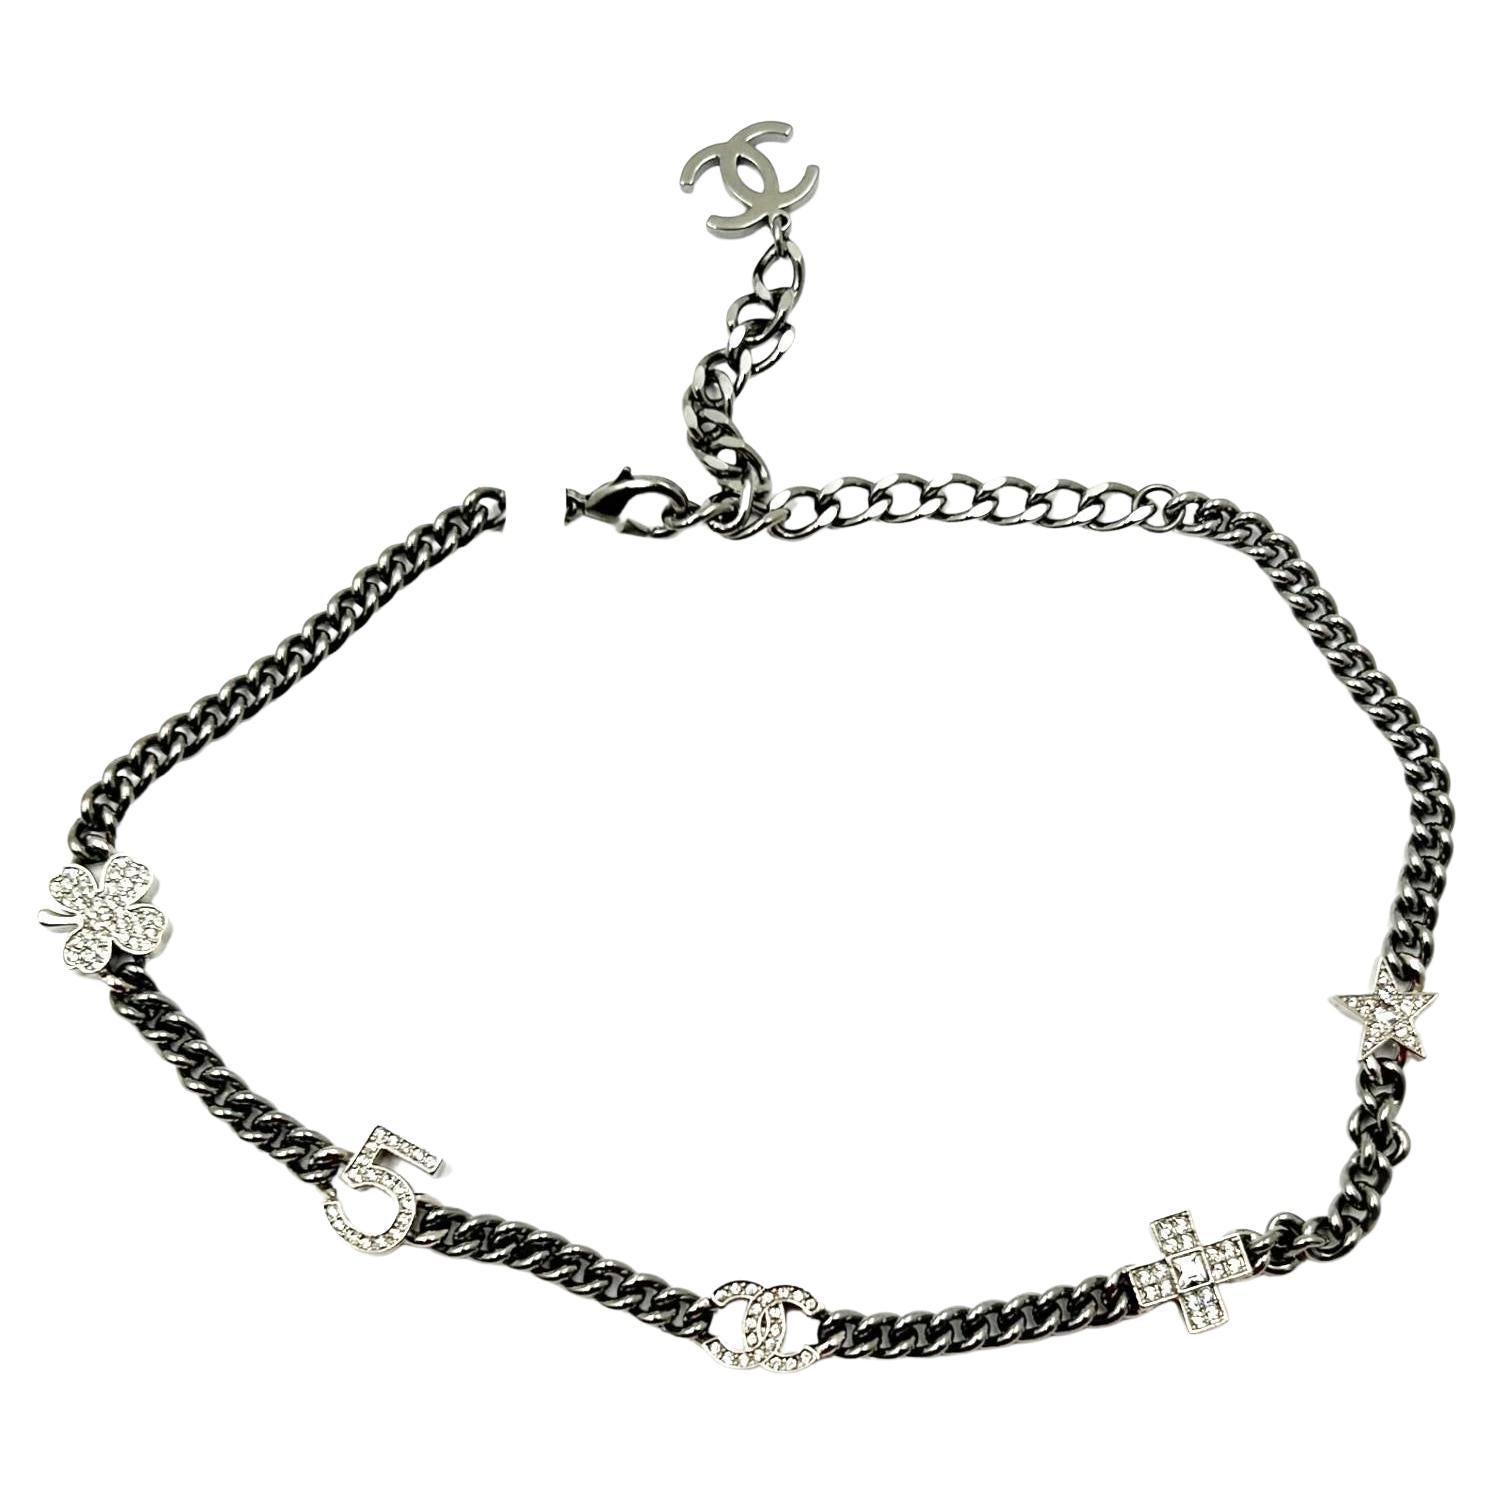 Chanel - Brand 5 Charms Gunmetal Chain Choker Necklace Italian Artisan Crystal Silver